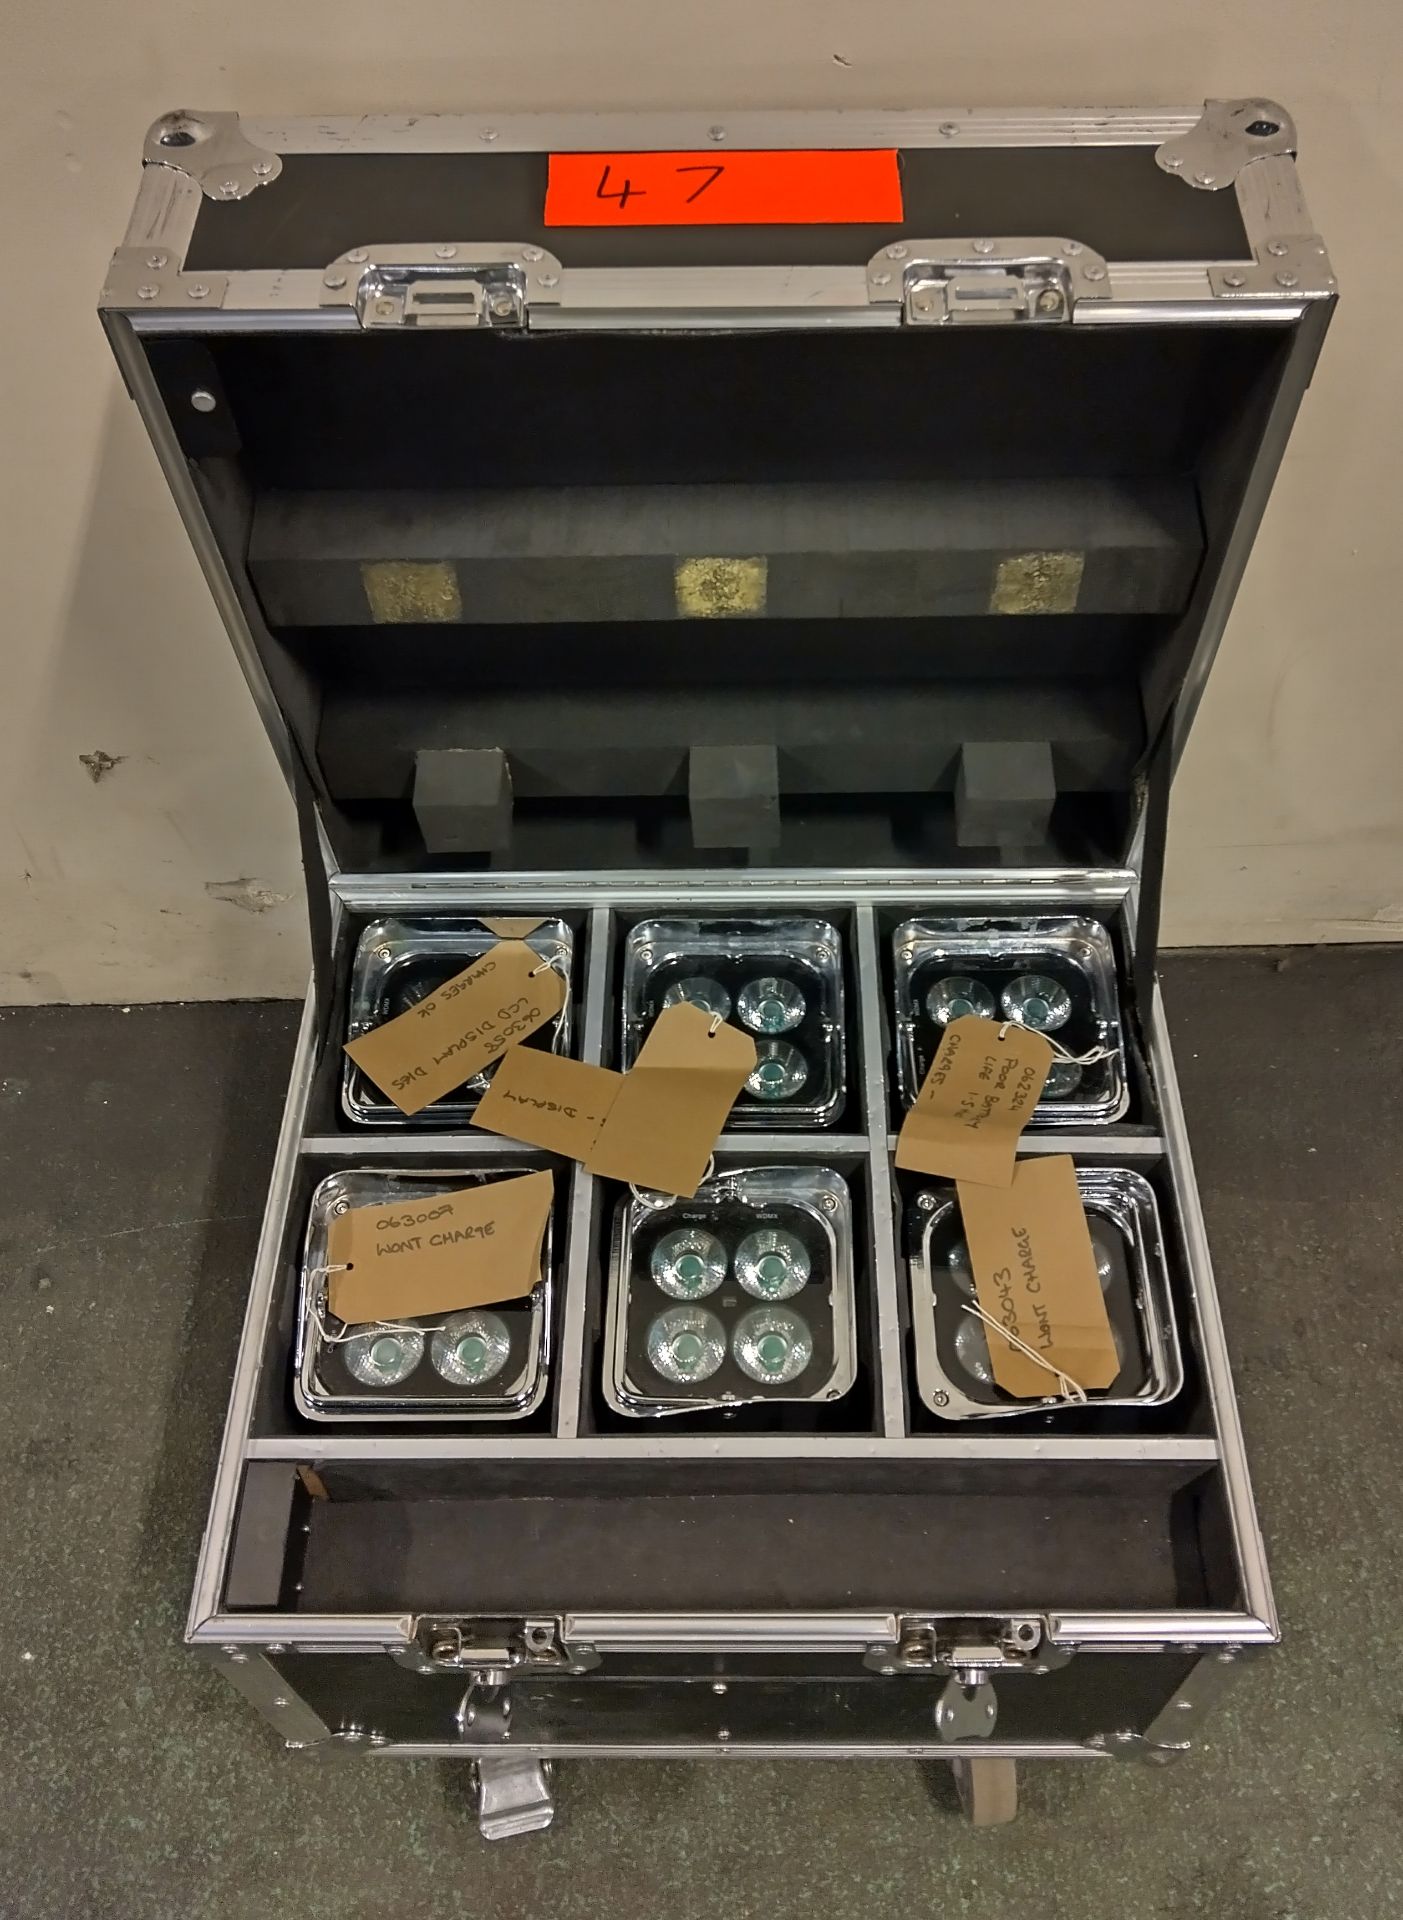 6x Prolight Smartbat battery uplighters in flight case - case dimensions: L 540 x W 470 x H 560mm - Image 5 of 10